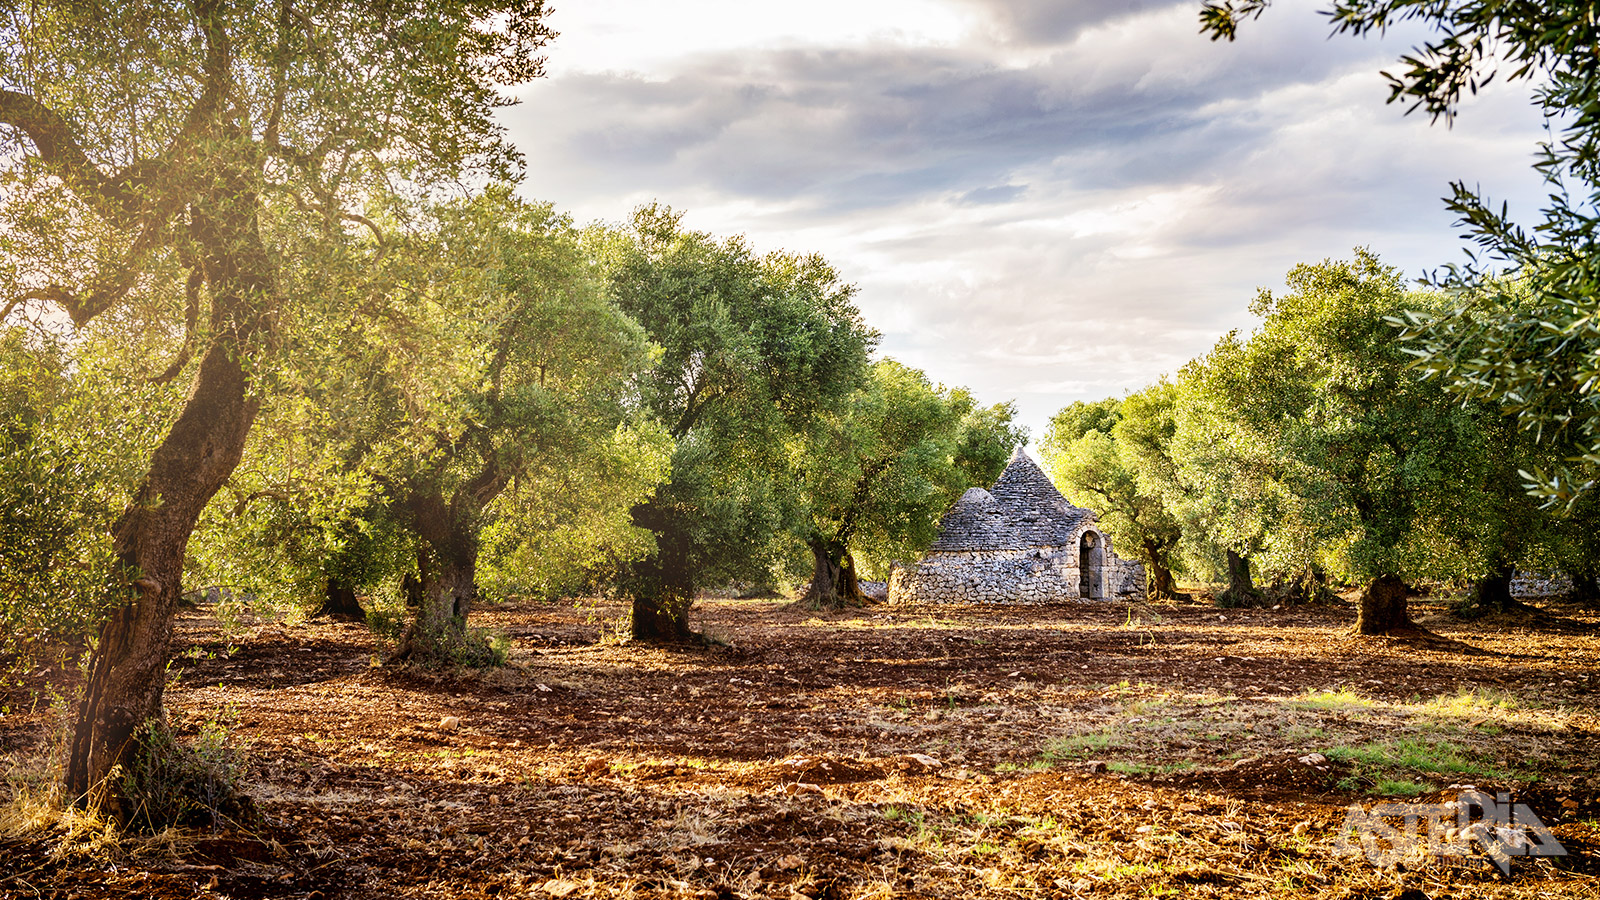 Via de vele olijfgaarden  bereik je één van de mooiste dorpjes van Italië: Locorotondo